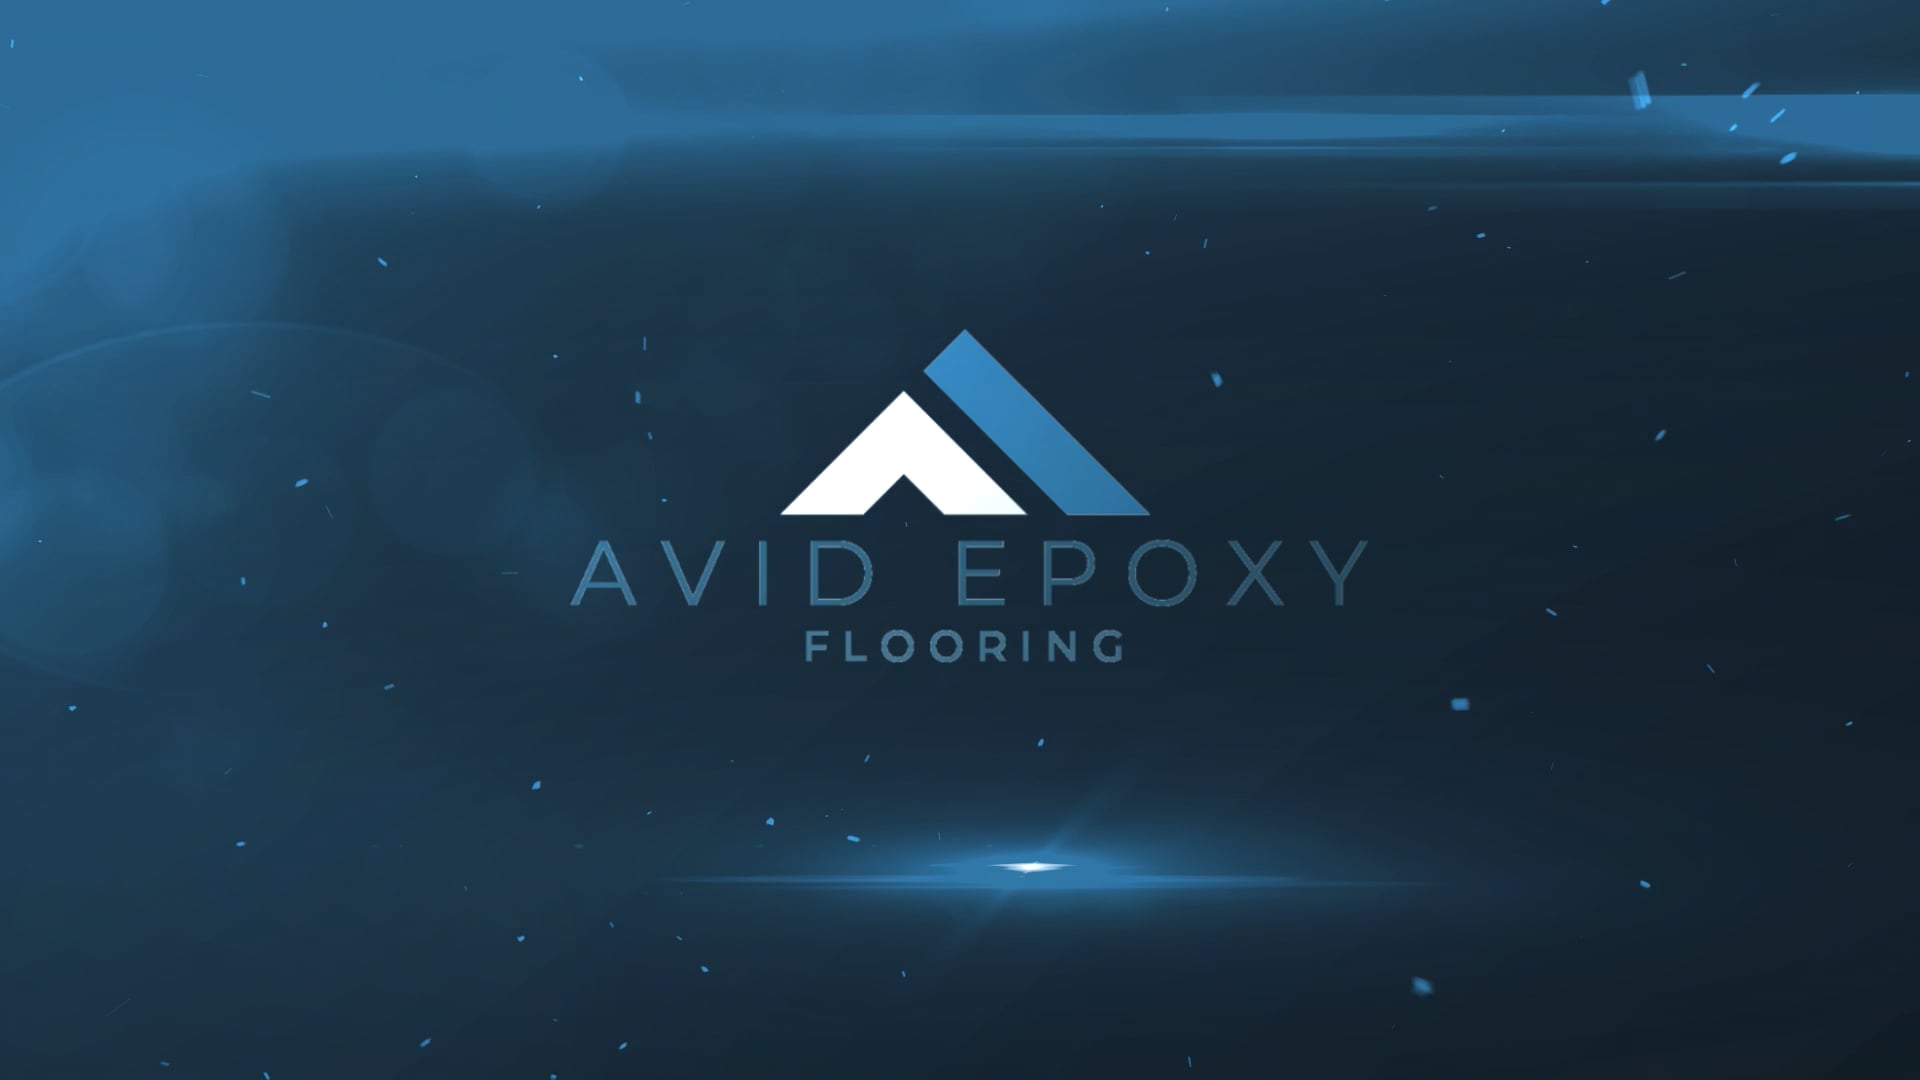 (c) Avid-epoxy.com